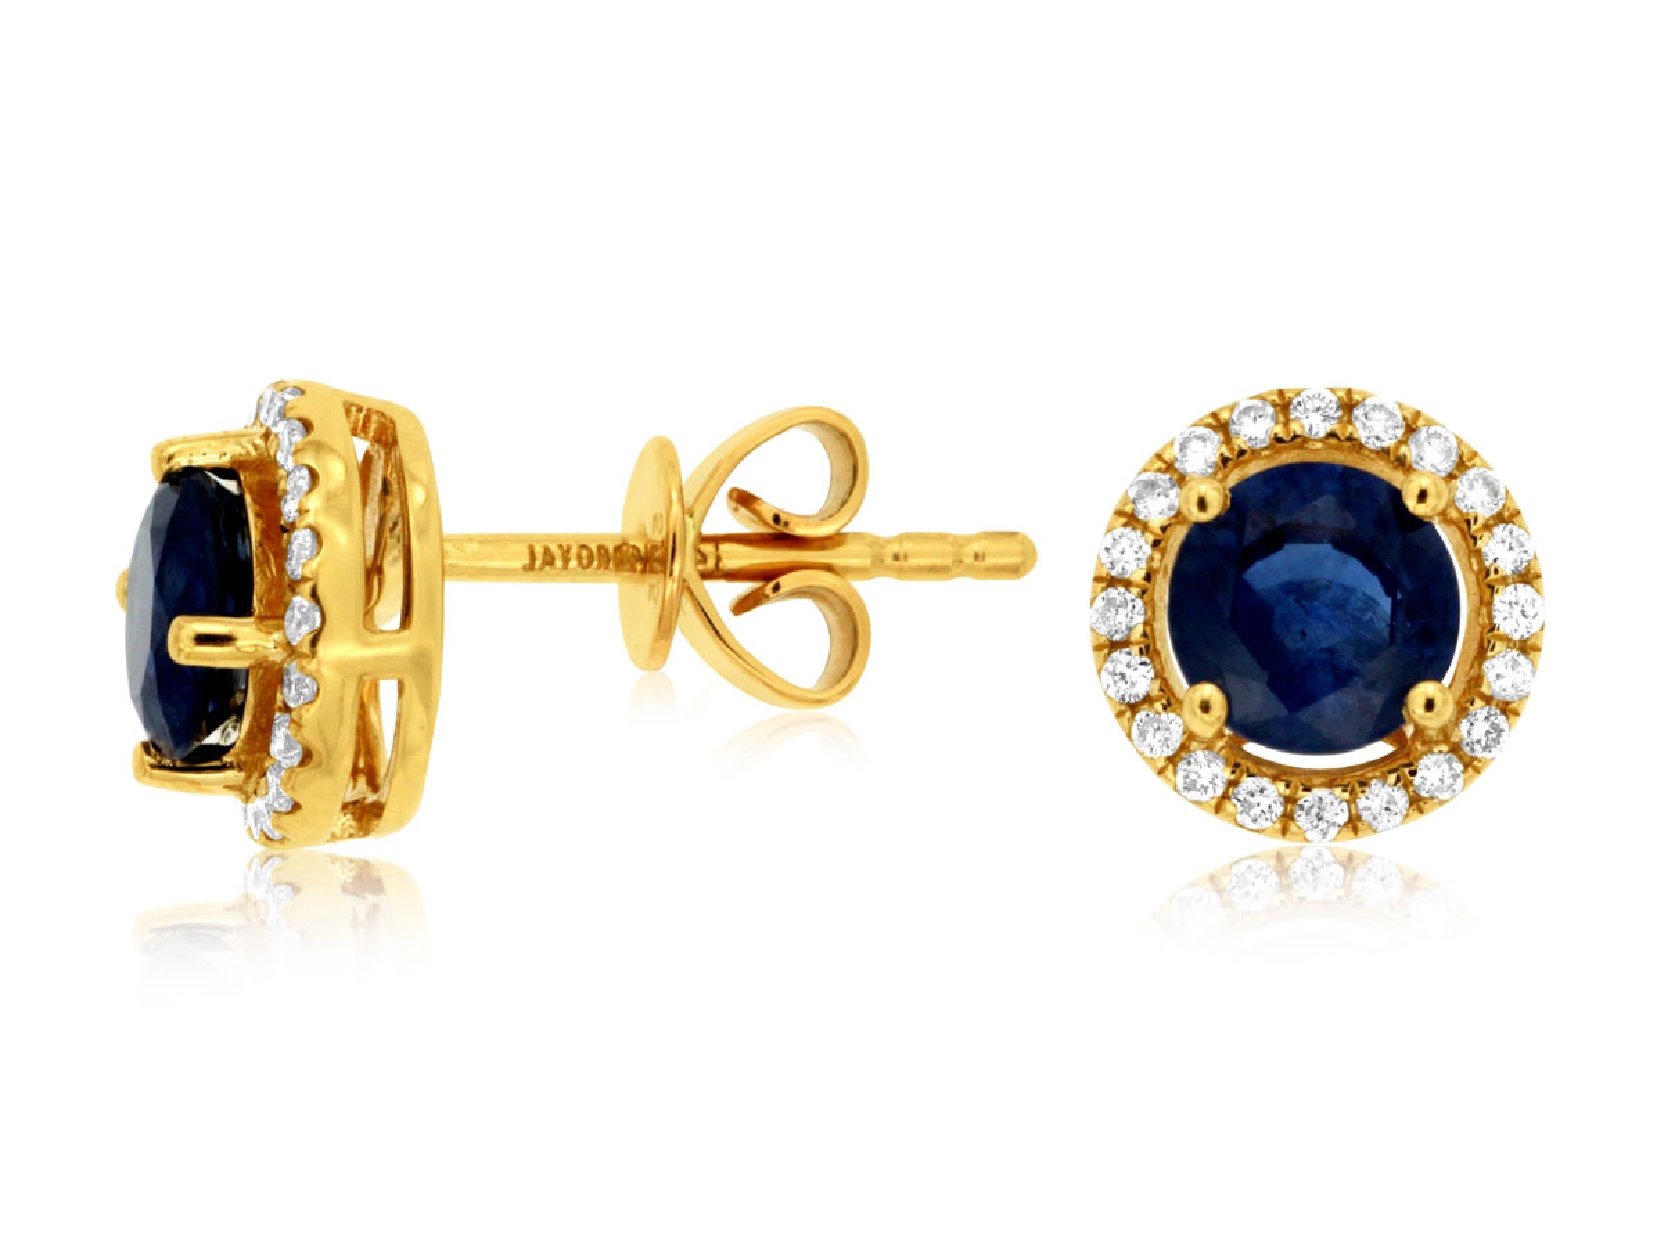 14k Yellow Gold Round Sapphire Stud Earrings with Diamond Halo

1.10cttw Sapphires
0.15cttw Diamonds